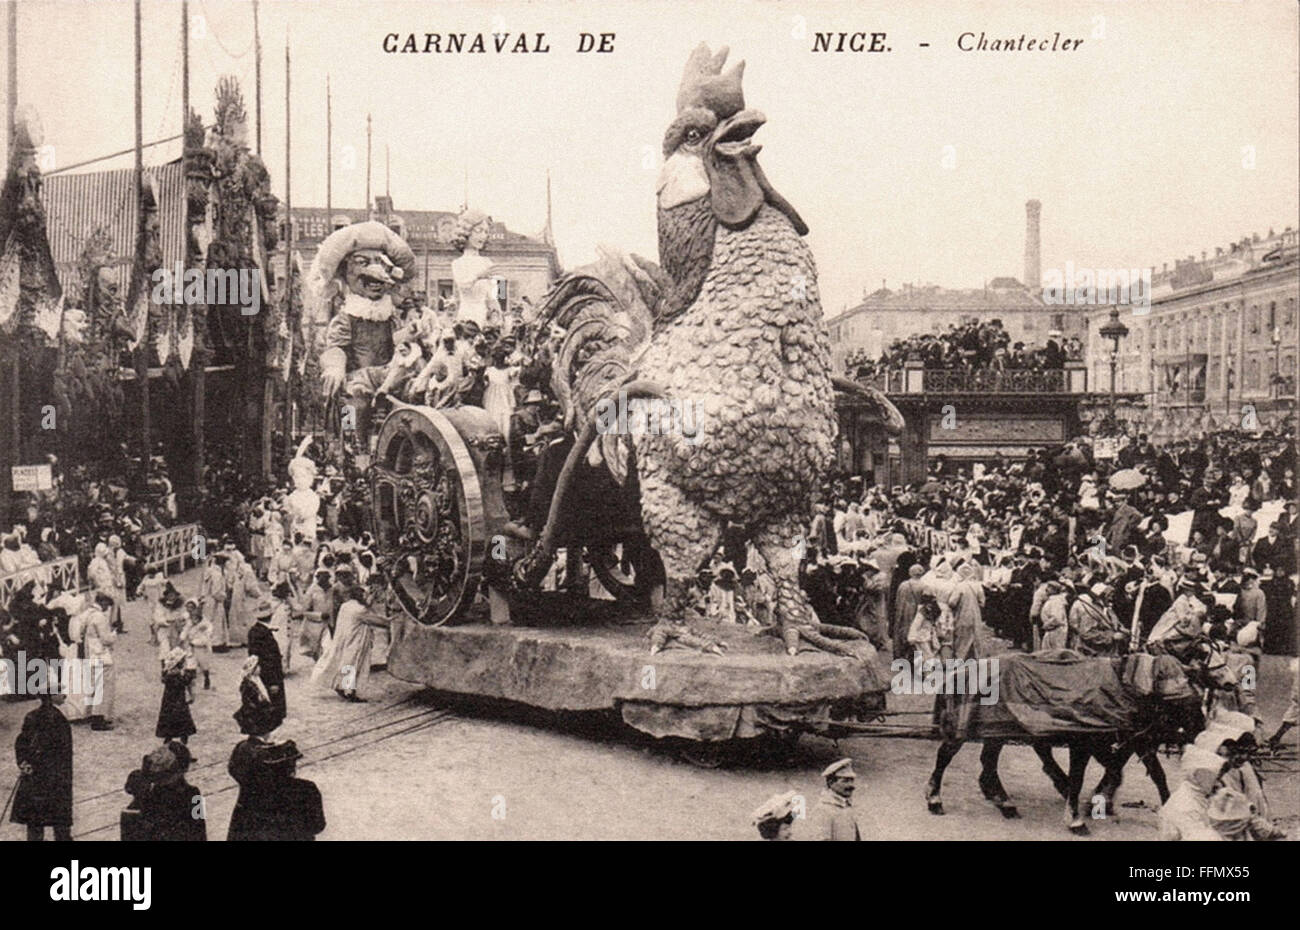 Carnaval de Niza - Chantecler - Vintage postal - 1900 Foto de stock